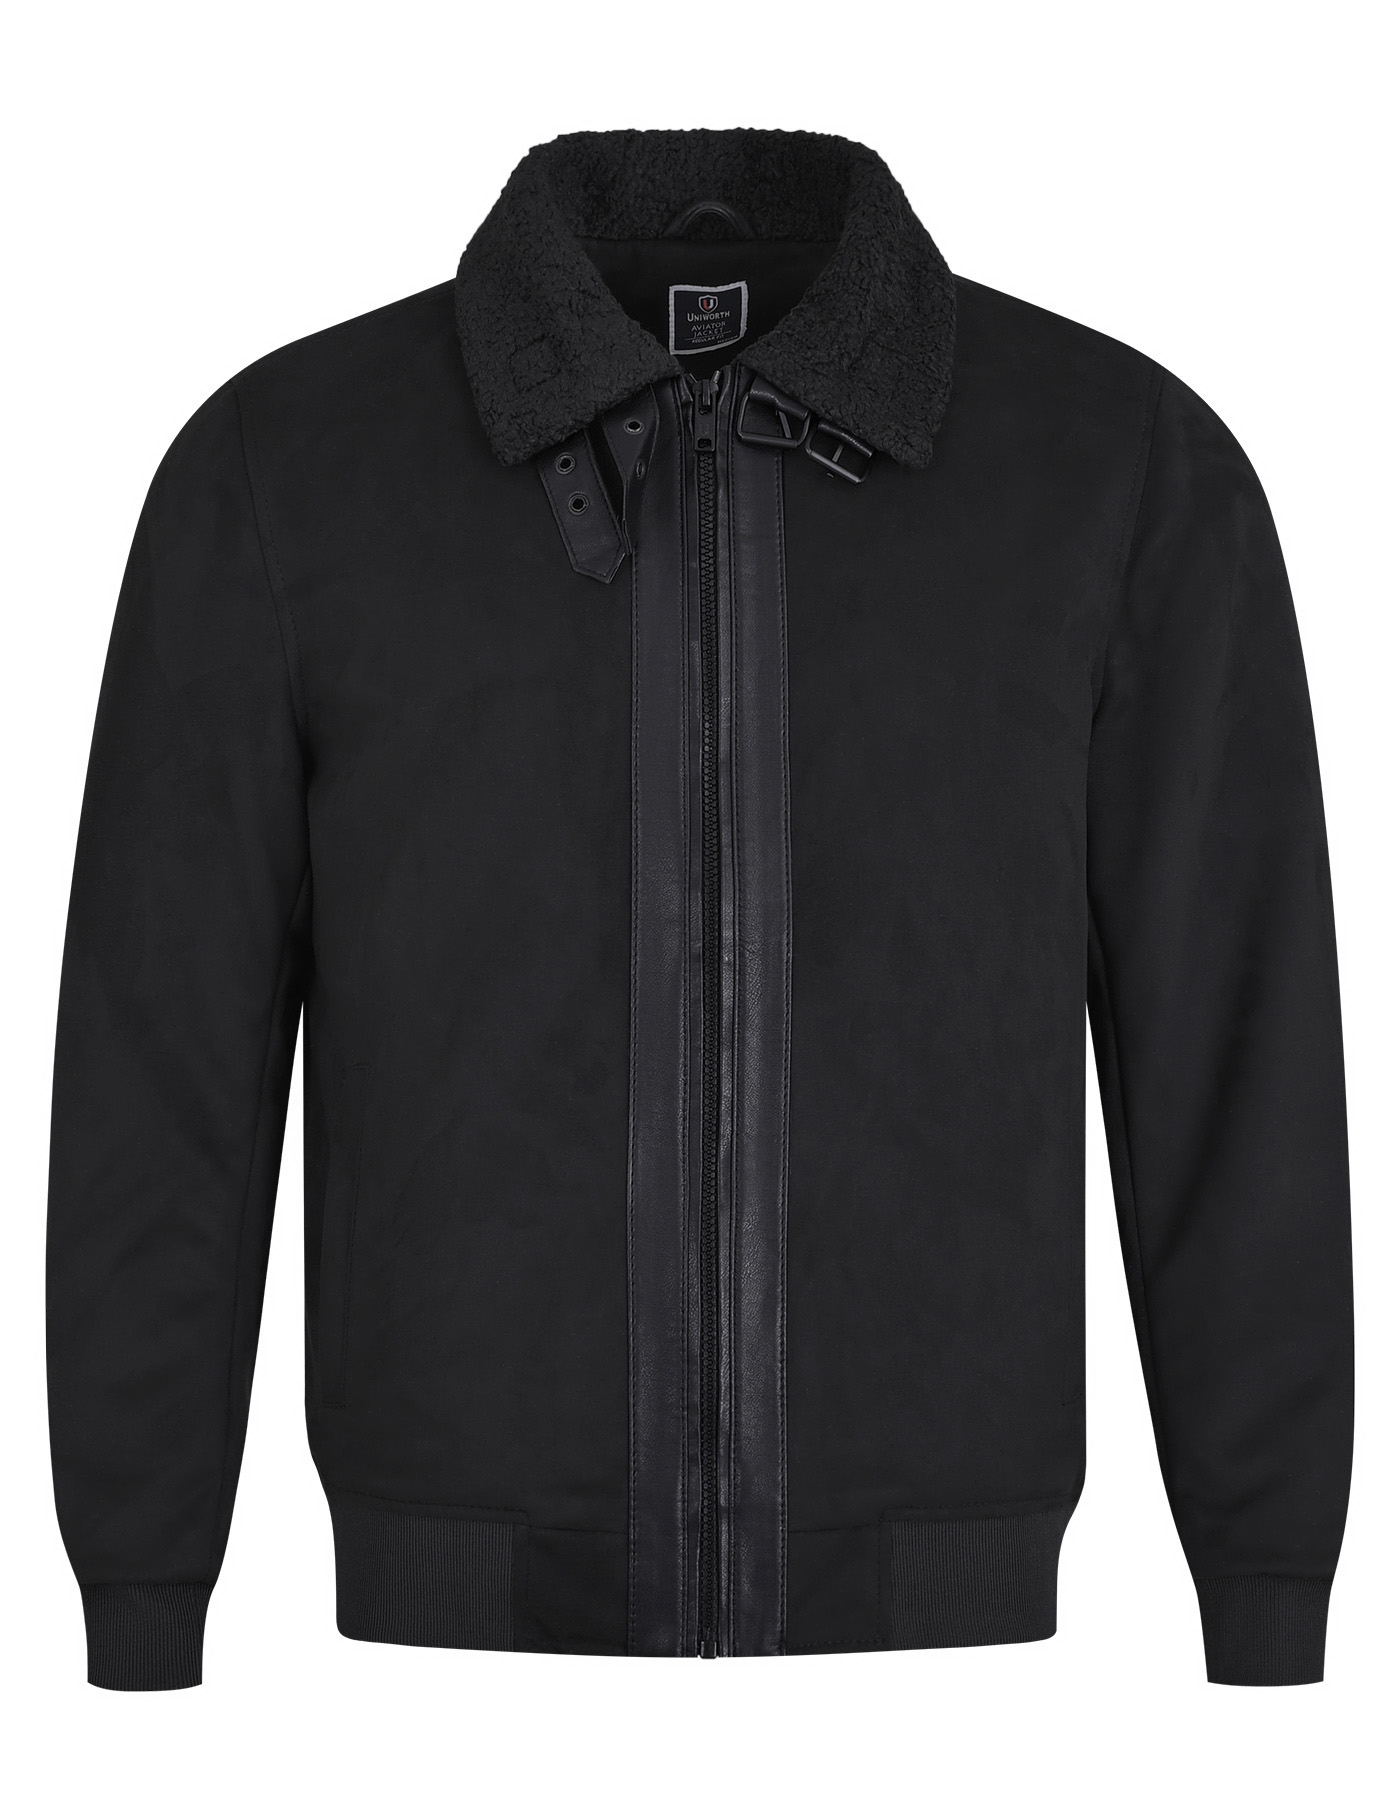 Shop Black Plain Aviator Jacket For Men